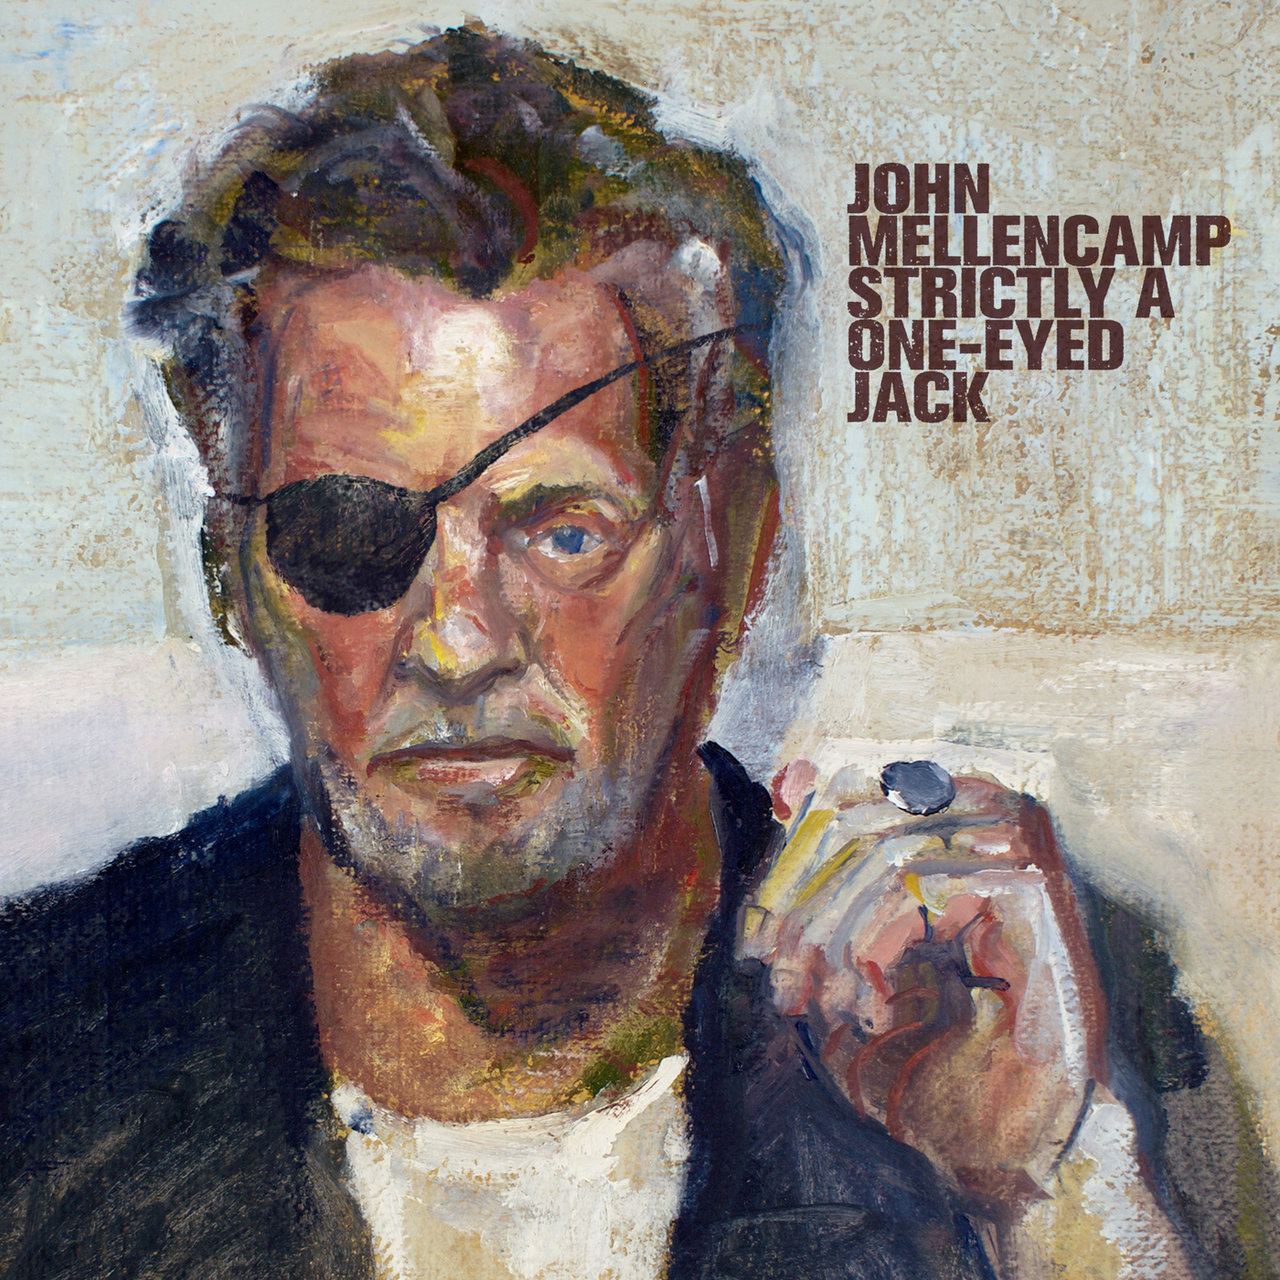 John Mellencamp - Strictly A One-Eyed Jack (Cover)